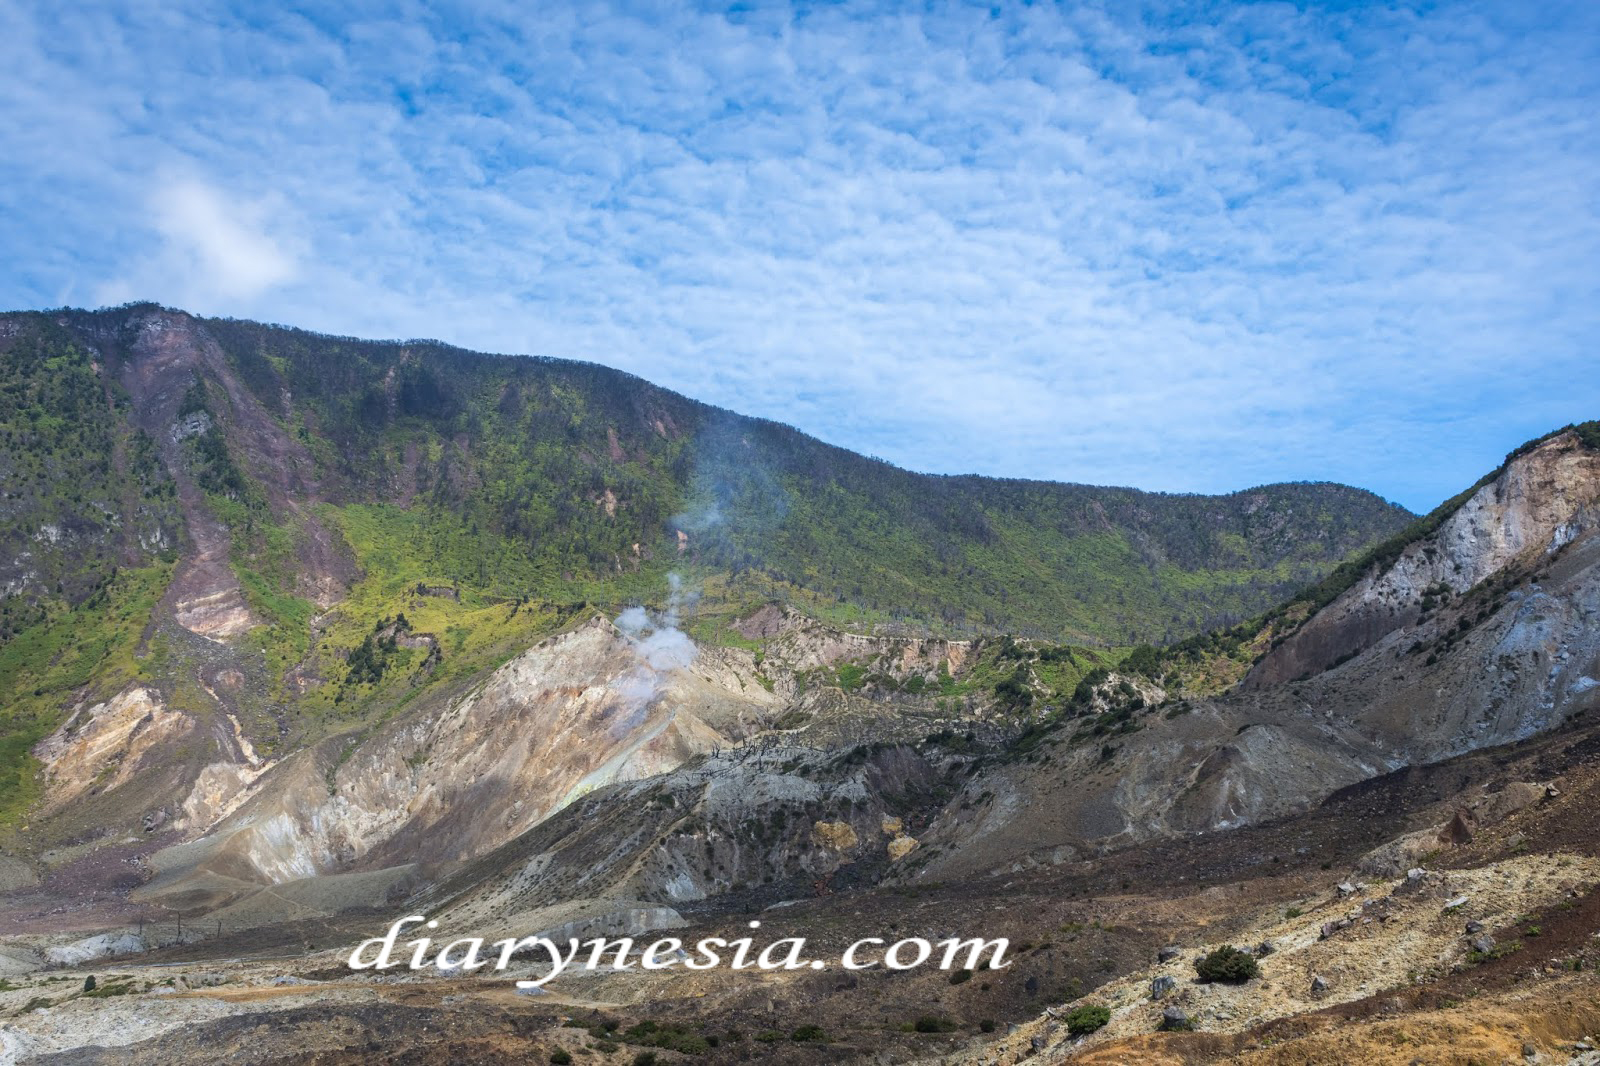 Hiking vacations Indonesia, Mountain Tours and Hikes, Hiking trips Indonesia, diarynesia